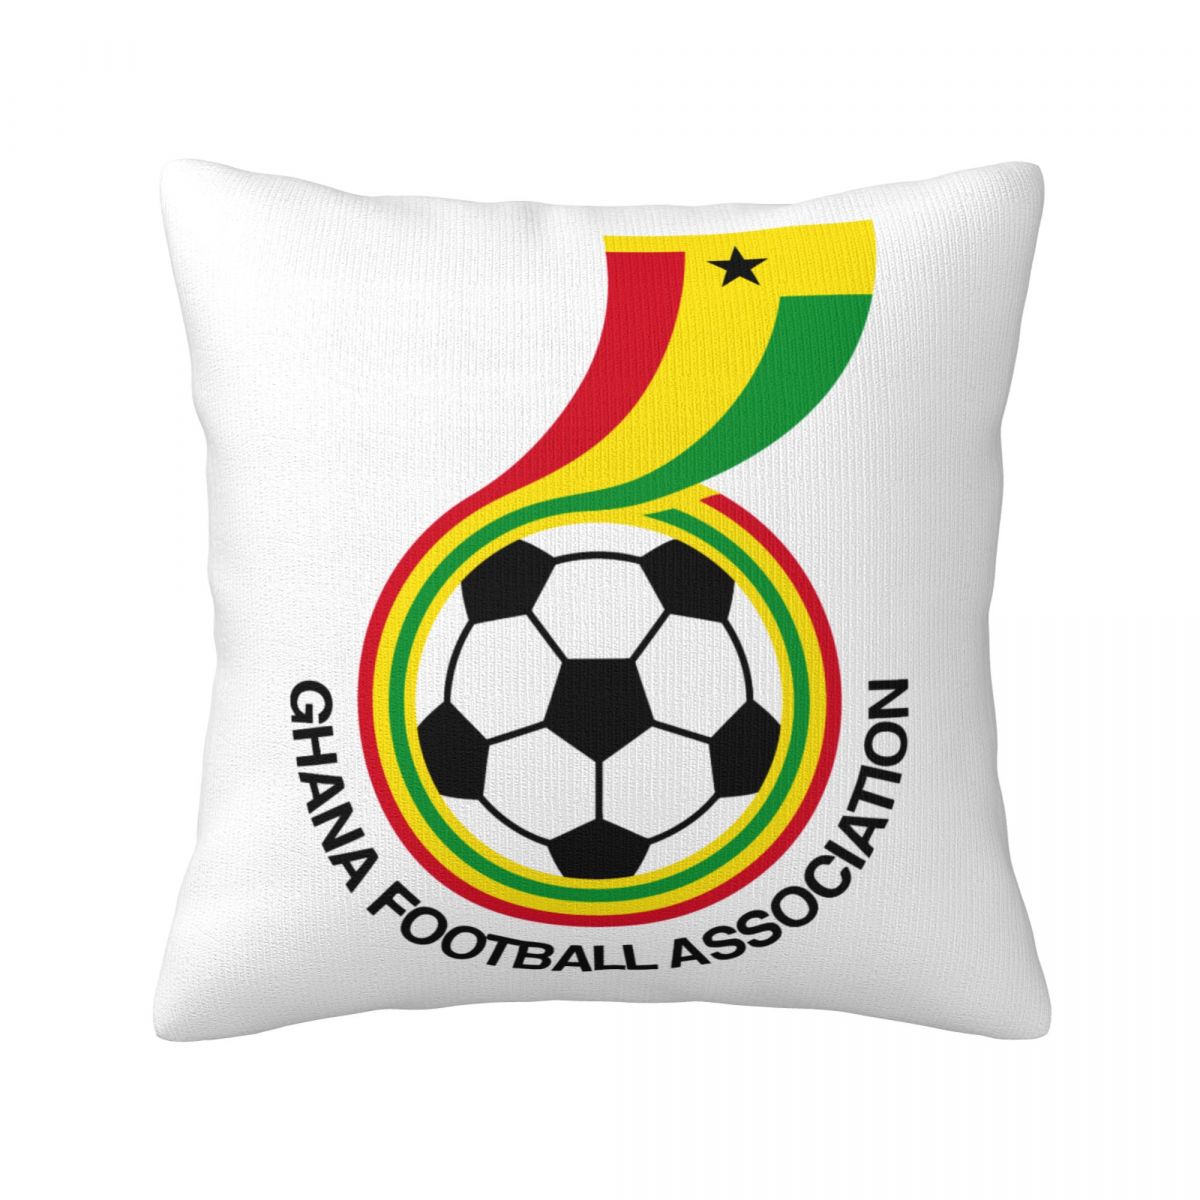 Ghana National Football Team Decorative Square Throw Pillow Covers